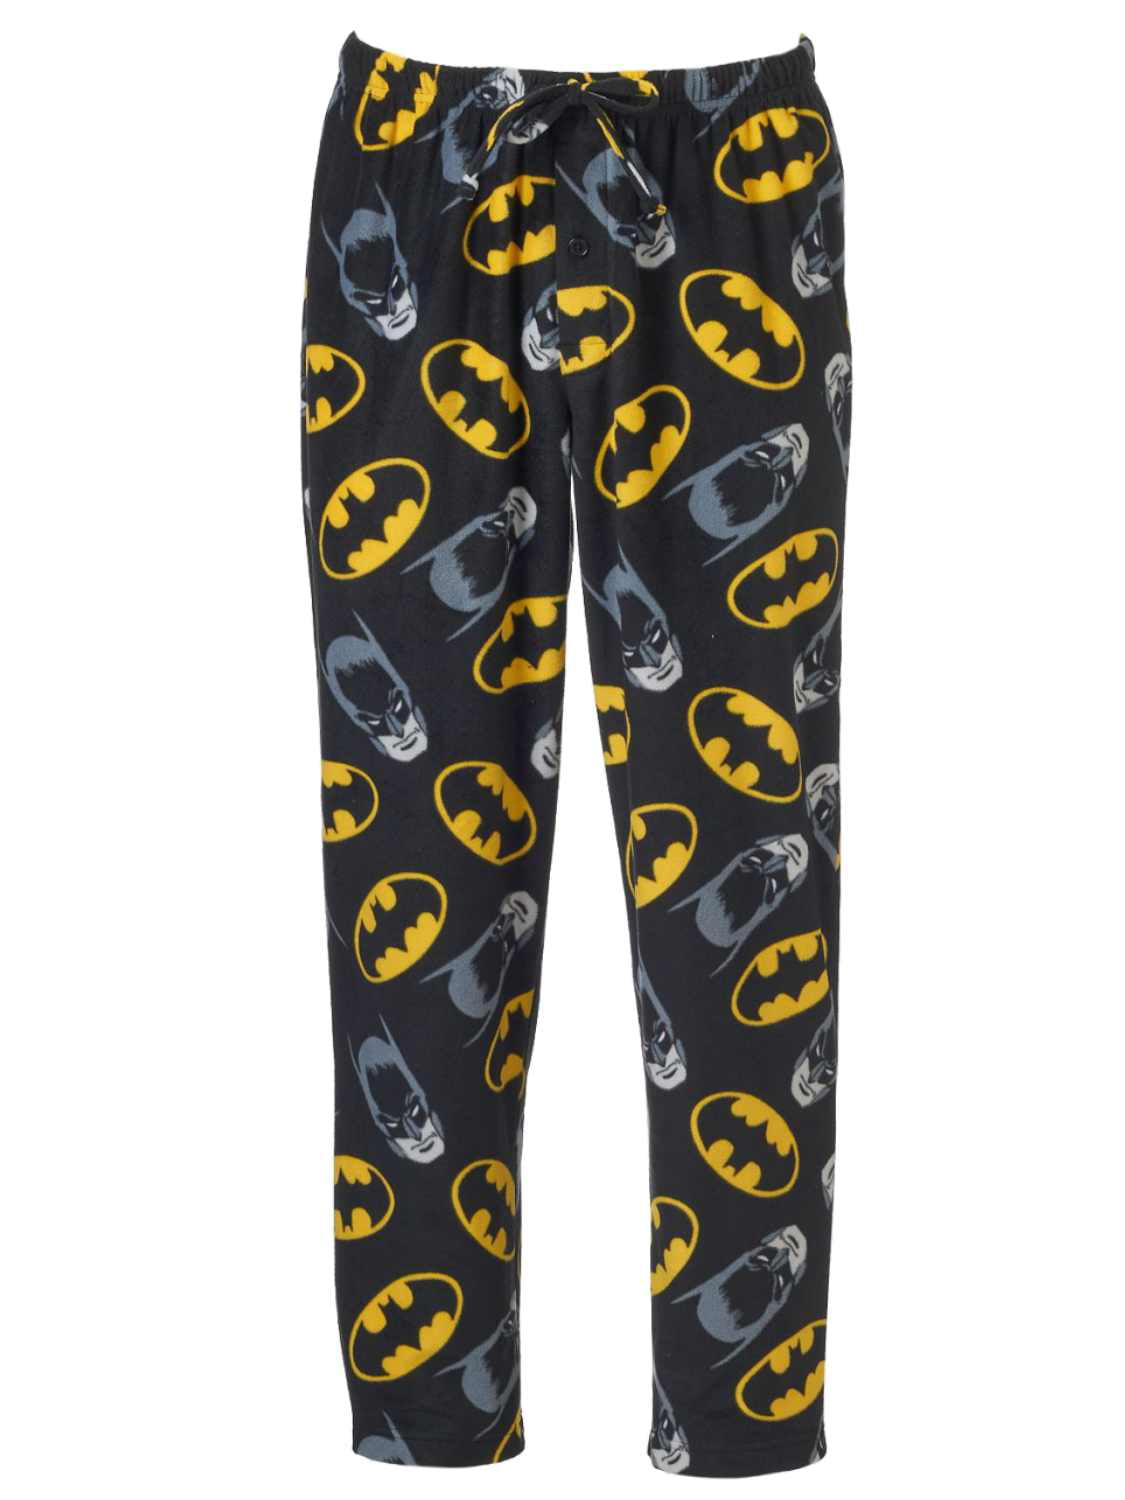 Mens Womens NEW Batman Joggers Black Pajama Lounge Pants Size S M